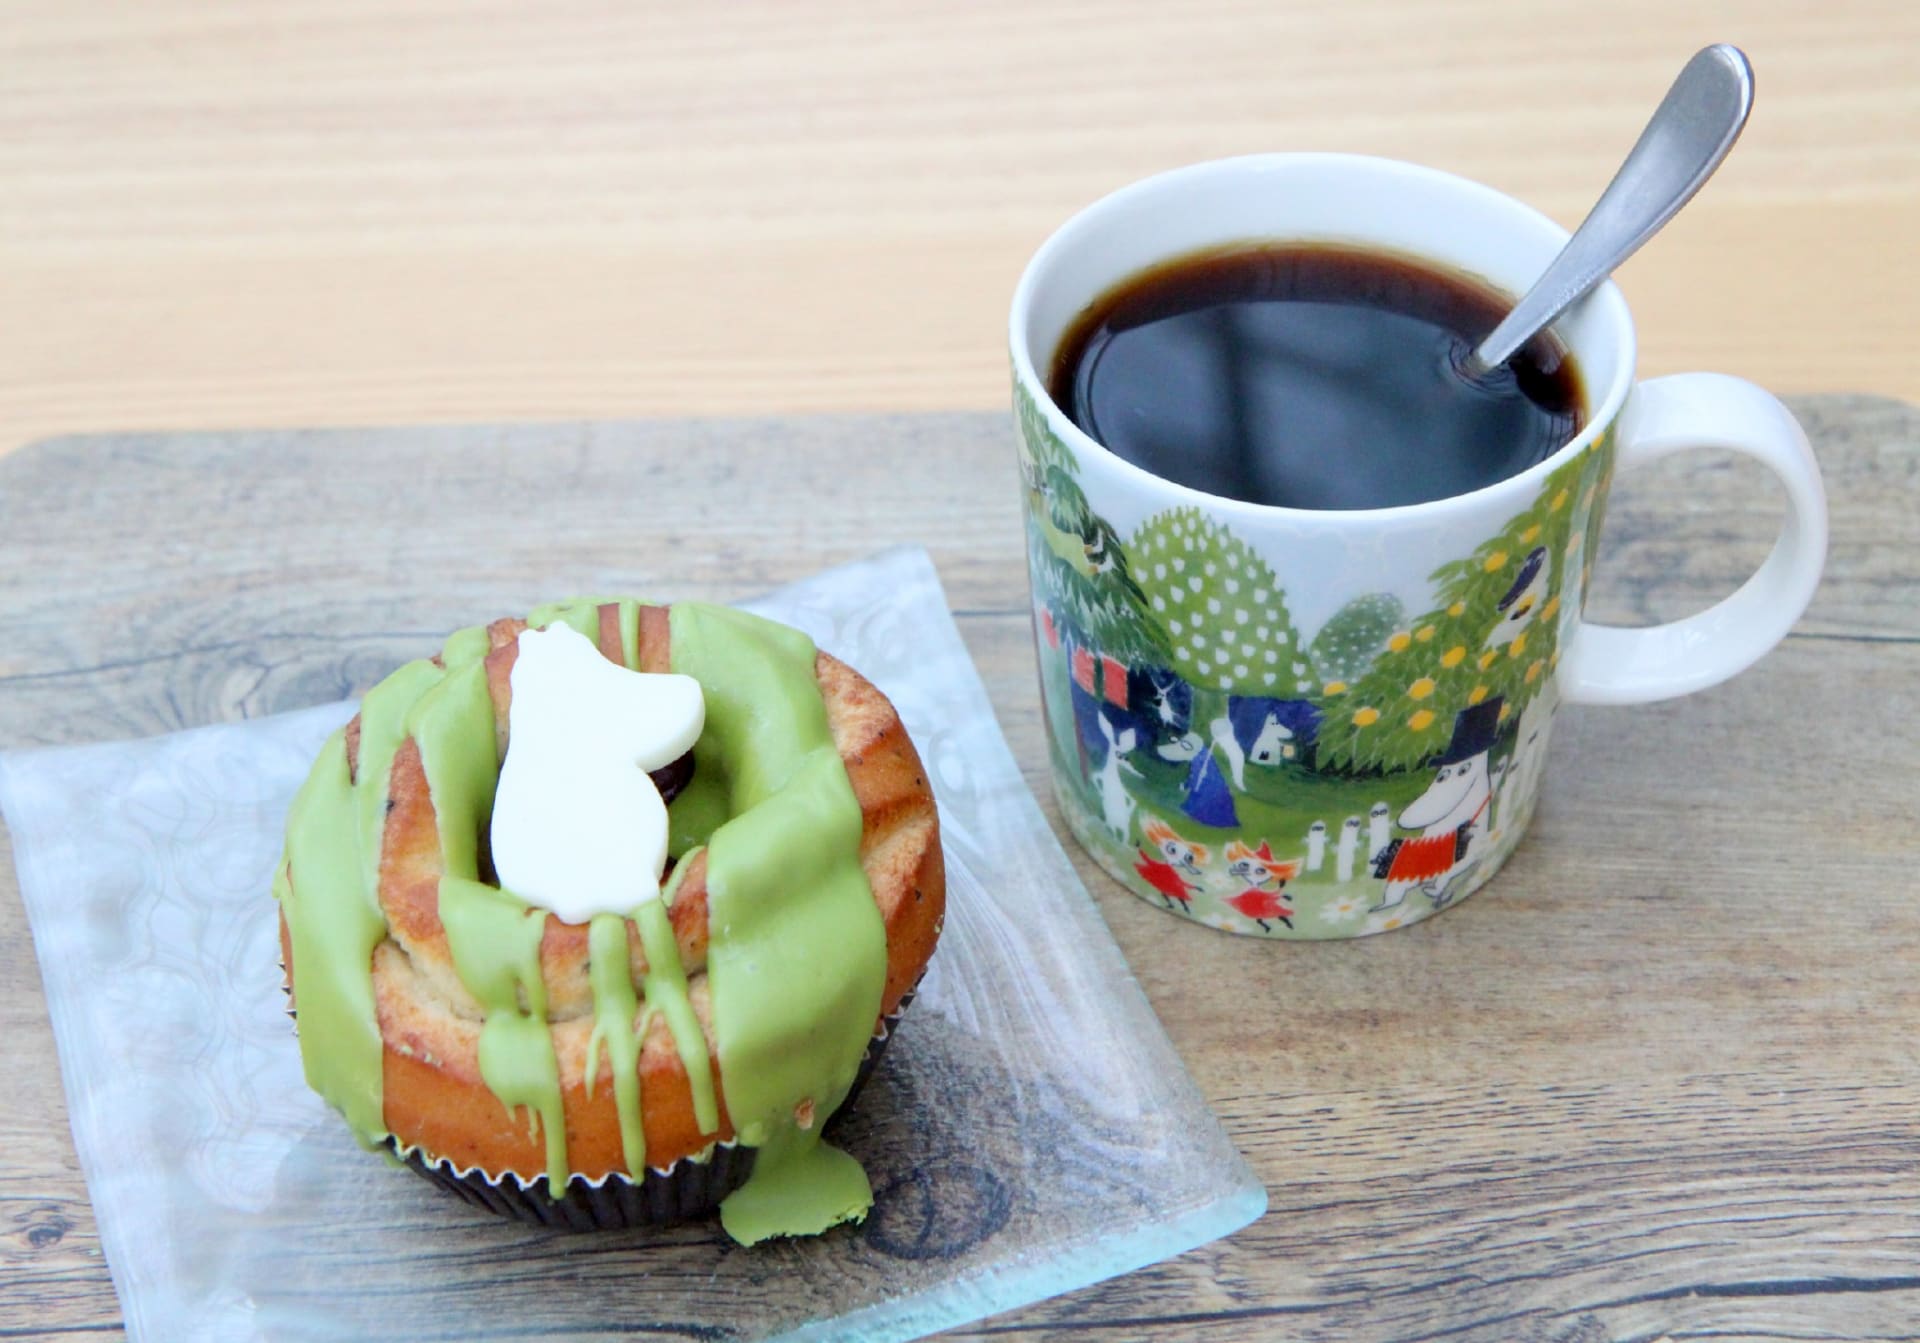 Restaurant Tuhto´s own Moomin coffee mug and a donut with Moomin figure